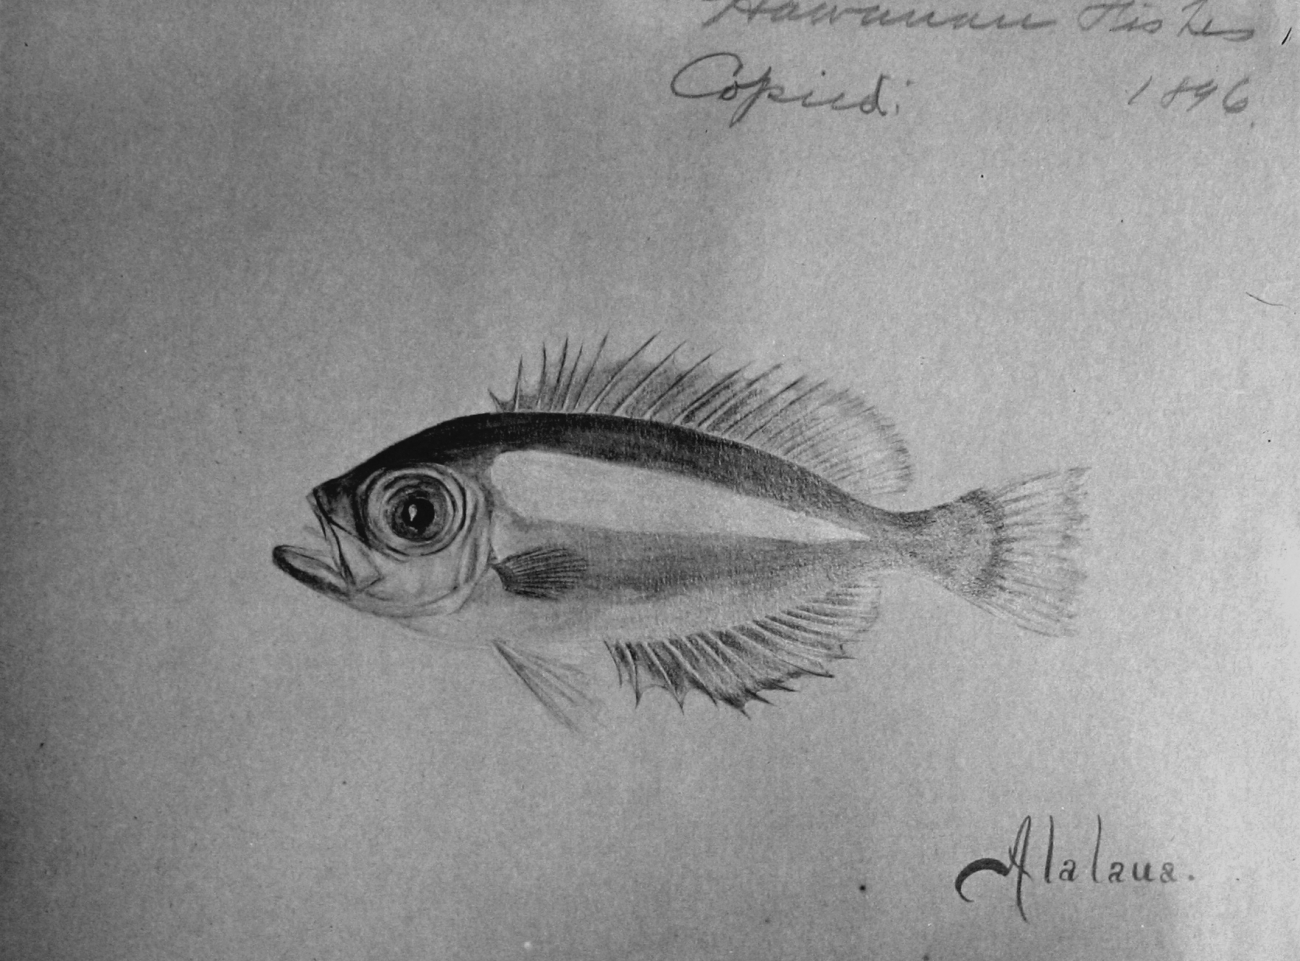 Hawaiian Fishes, 1896, Alalaus